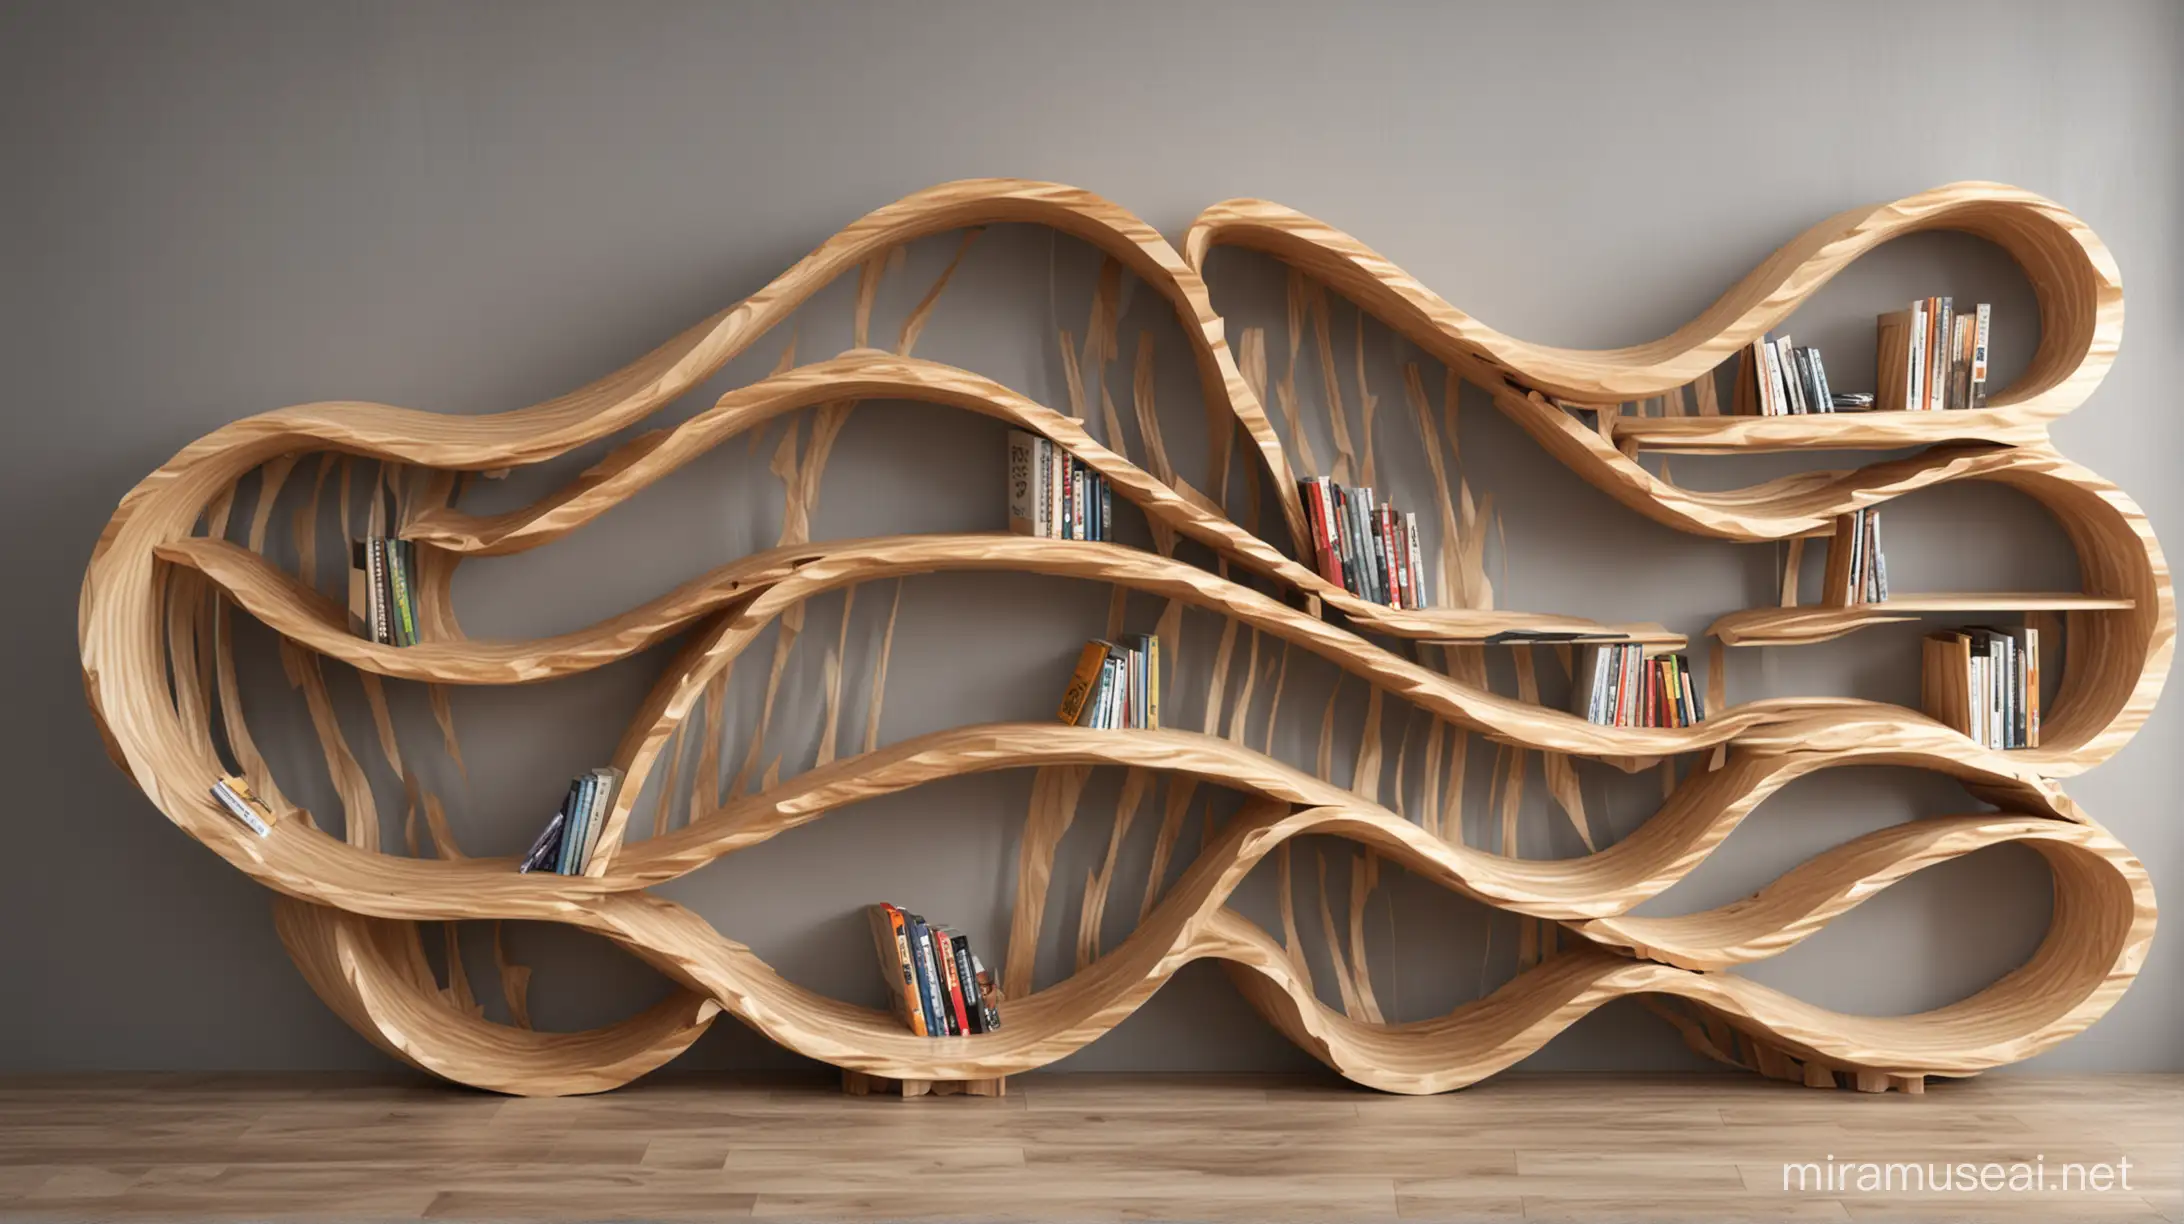 Futuristic Wood Bookshelf with Wavy Design and Varied Sizes